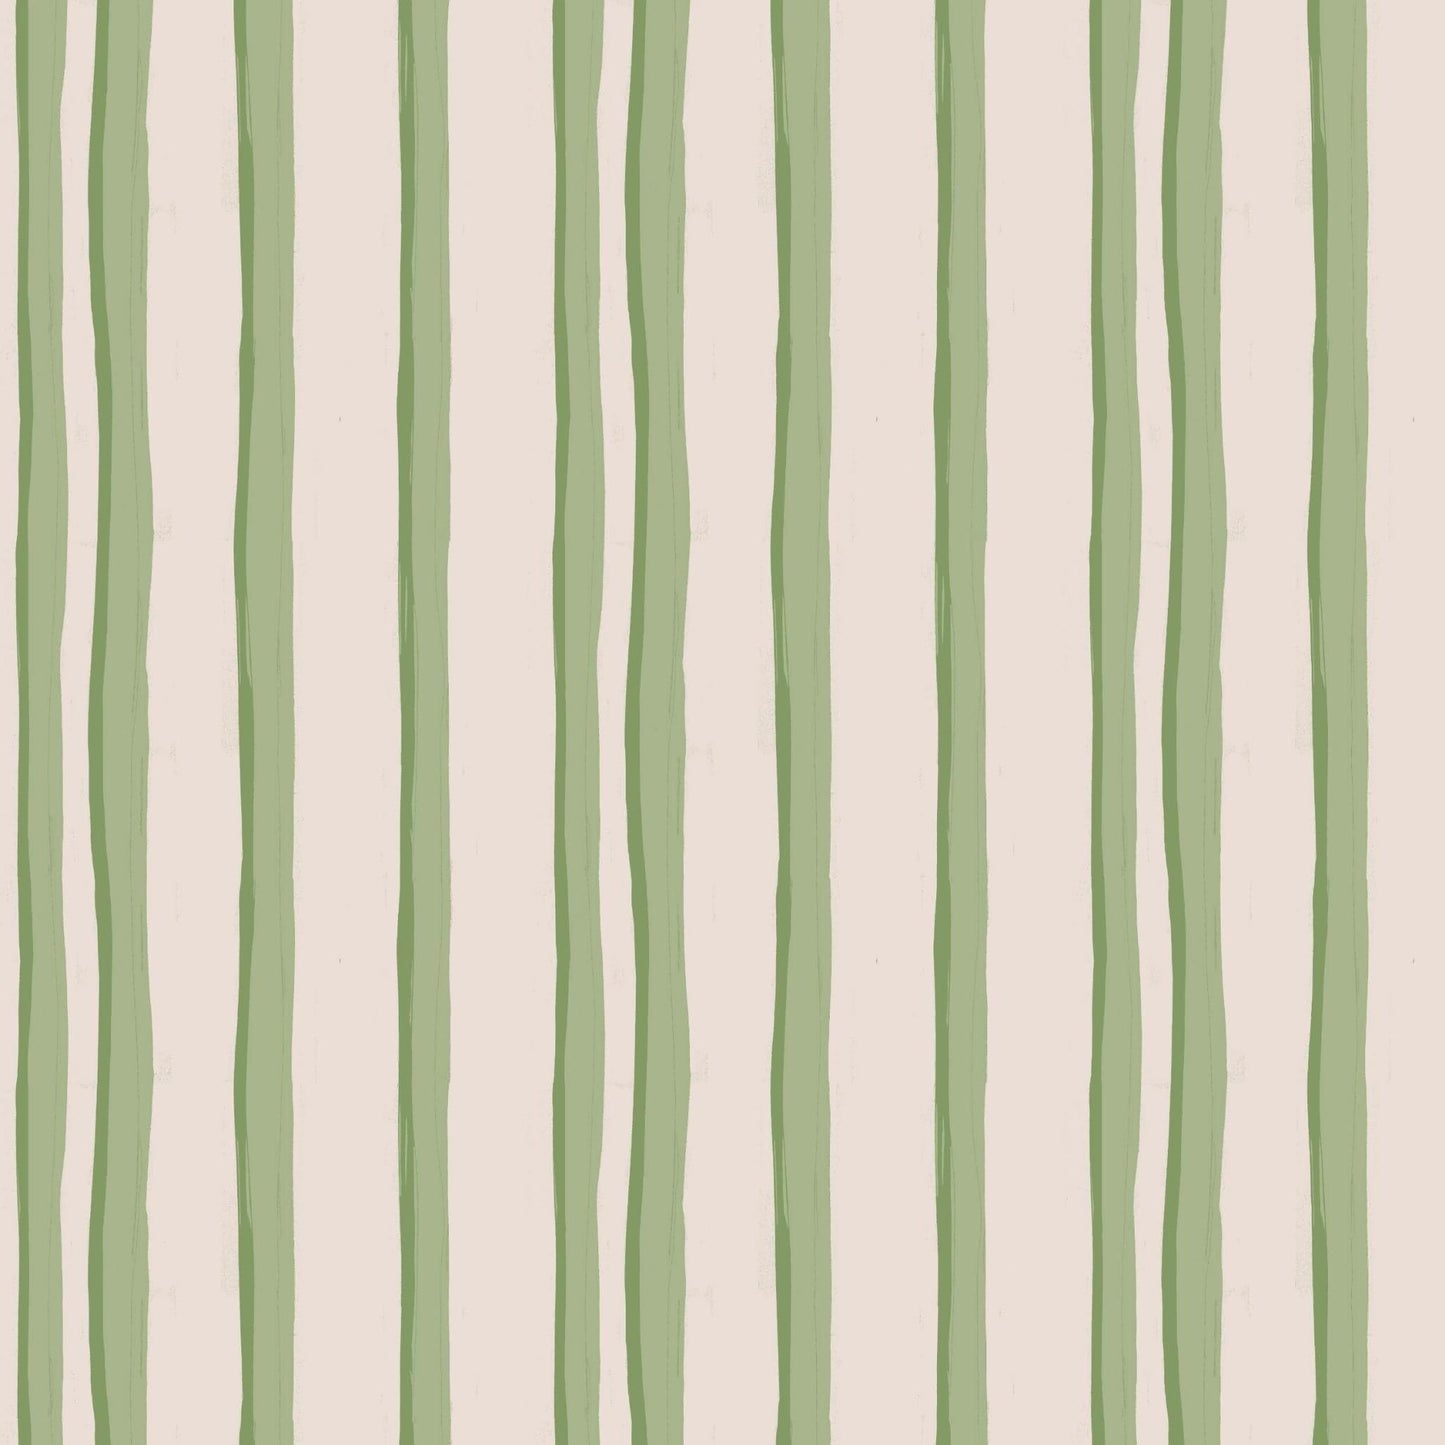 47+] Green and White Striped Wallpaper - WallpaperSafari